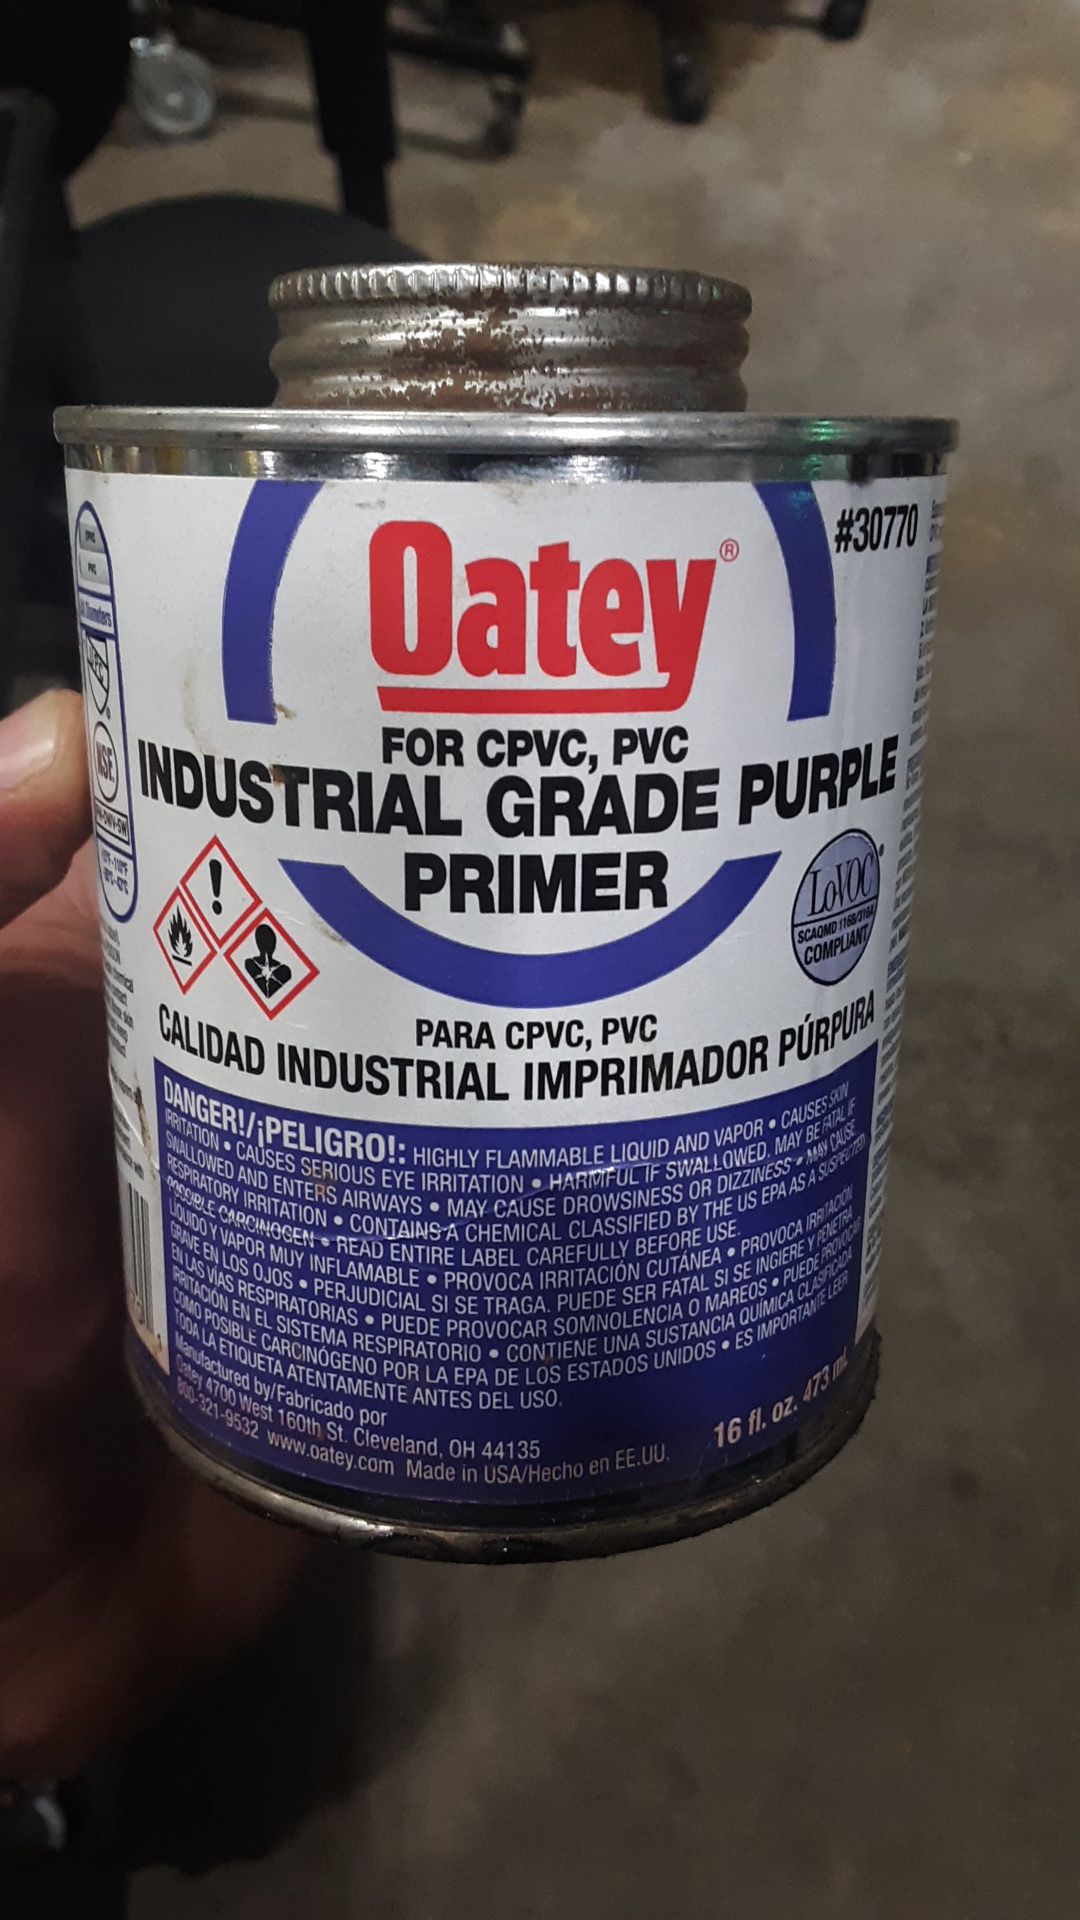 Industrial Grade Purple CPVC/PVC Primer